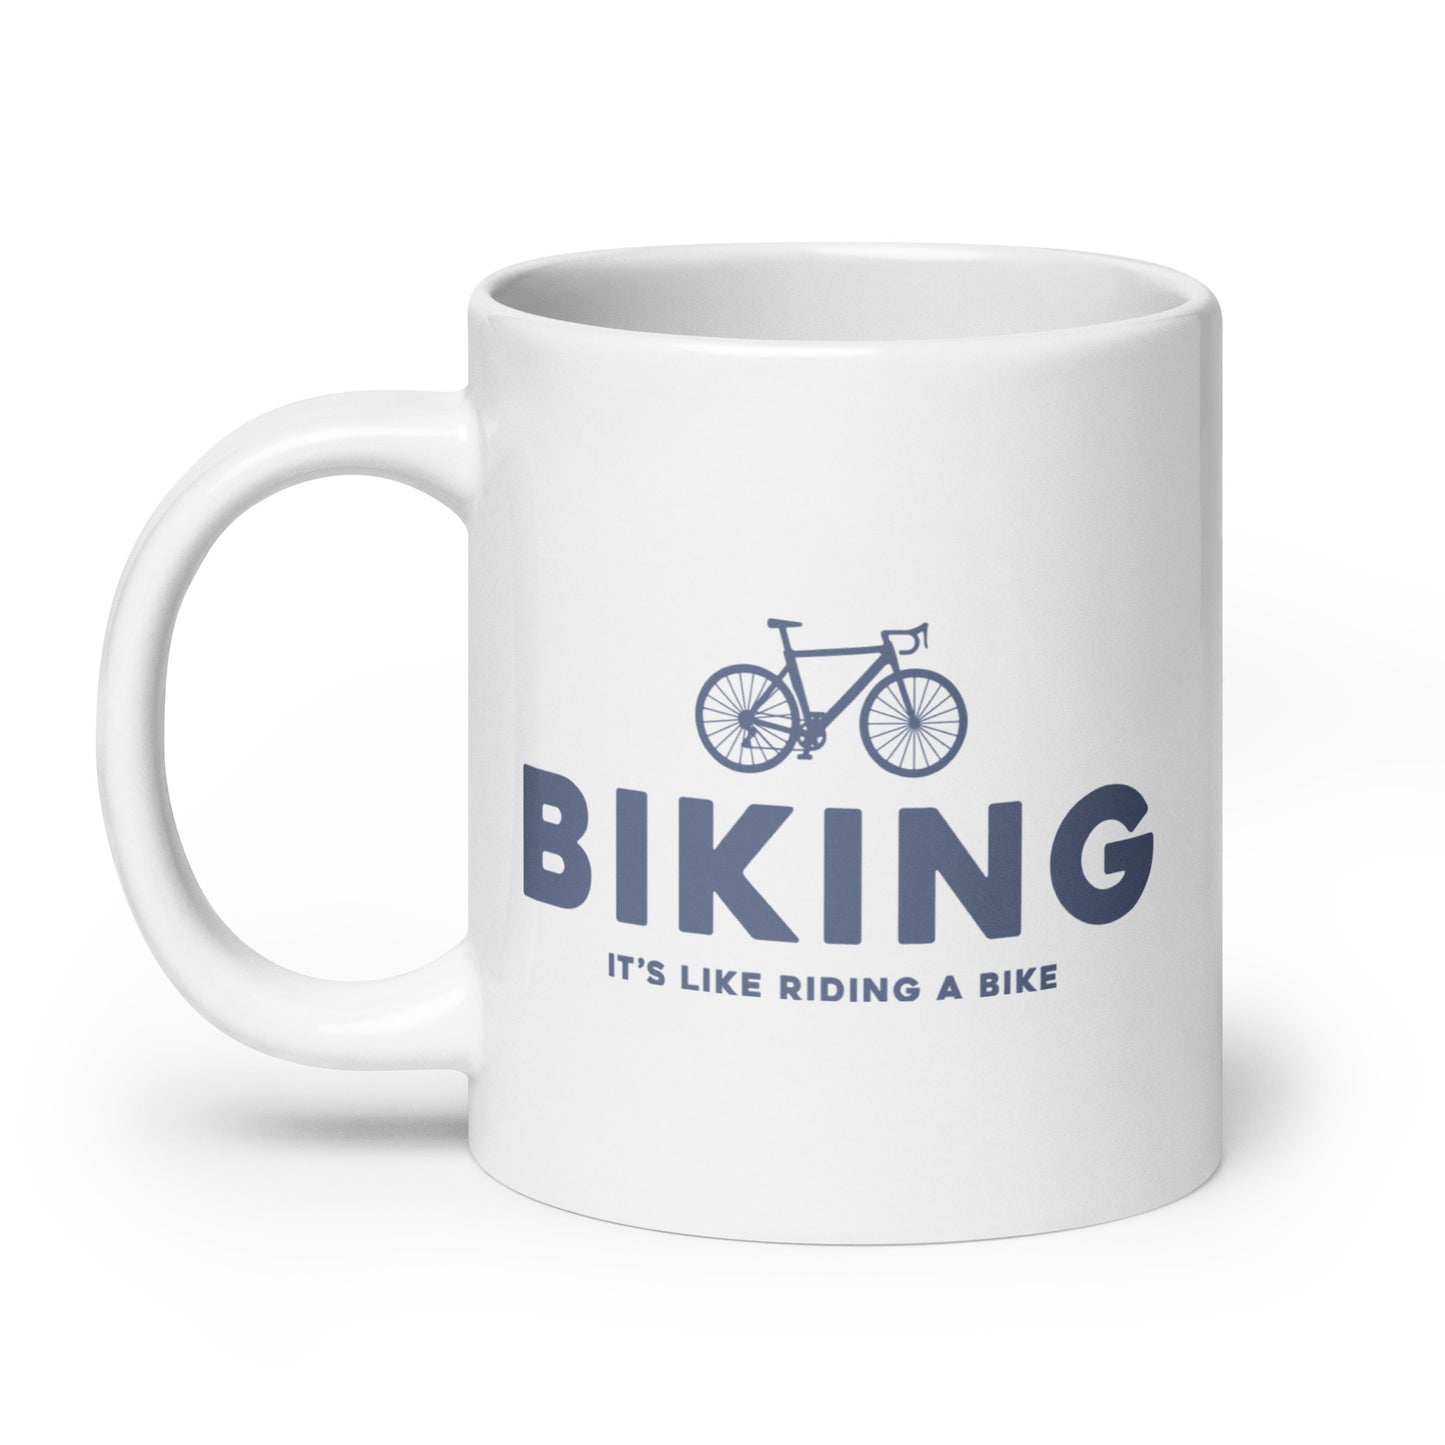 Bicycle Mug, Biking it's like Riding a Bike, Coffee Mug